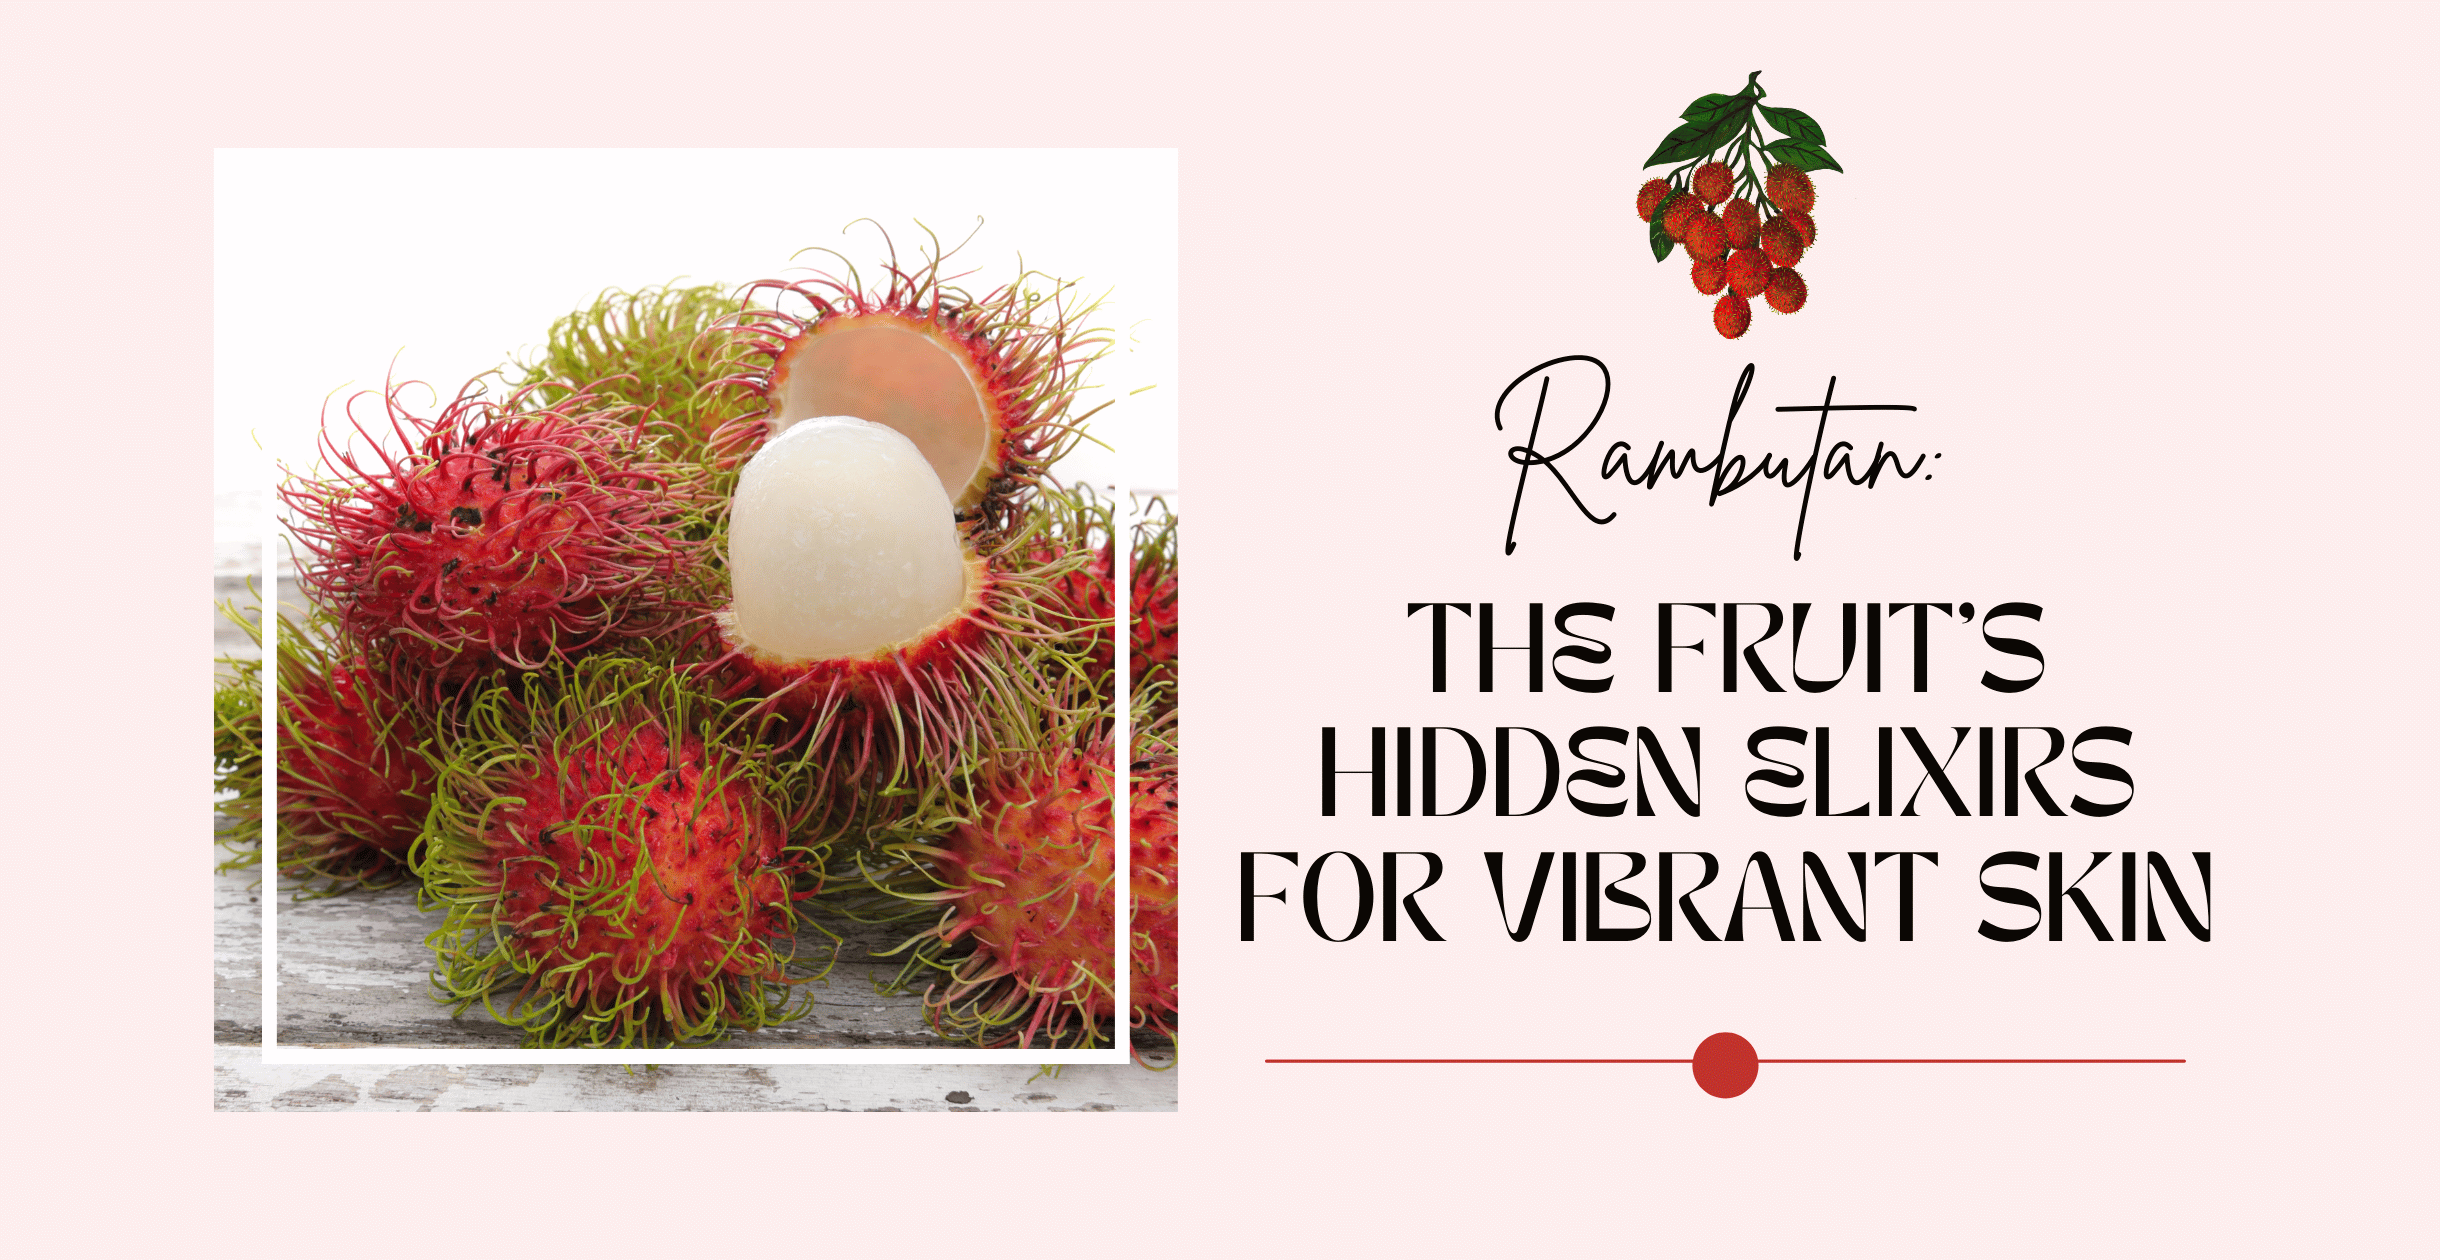 Rambutan: The Fruit's Hidden Elixirs for Vibrant Skin